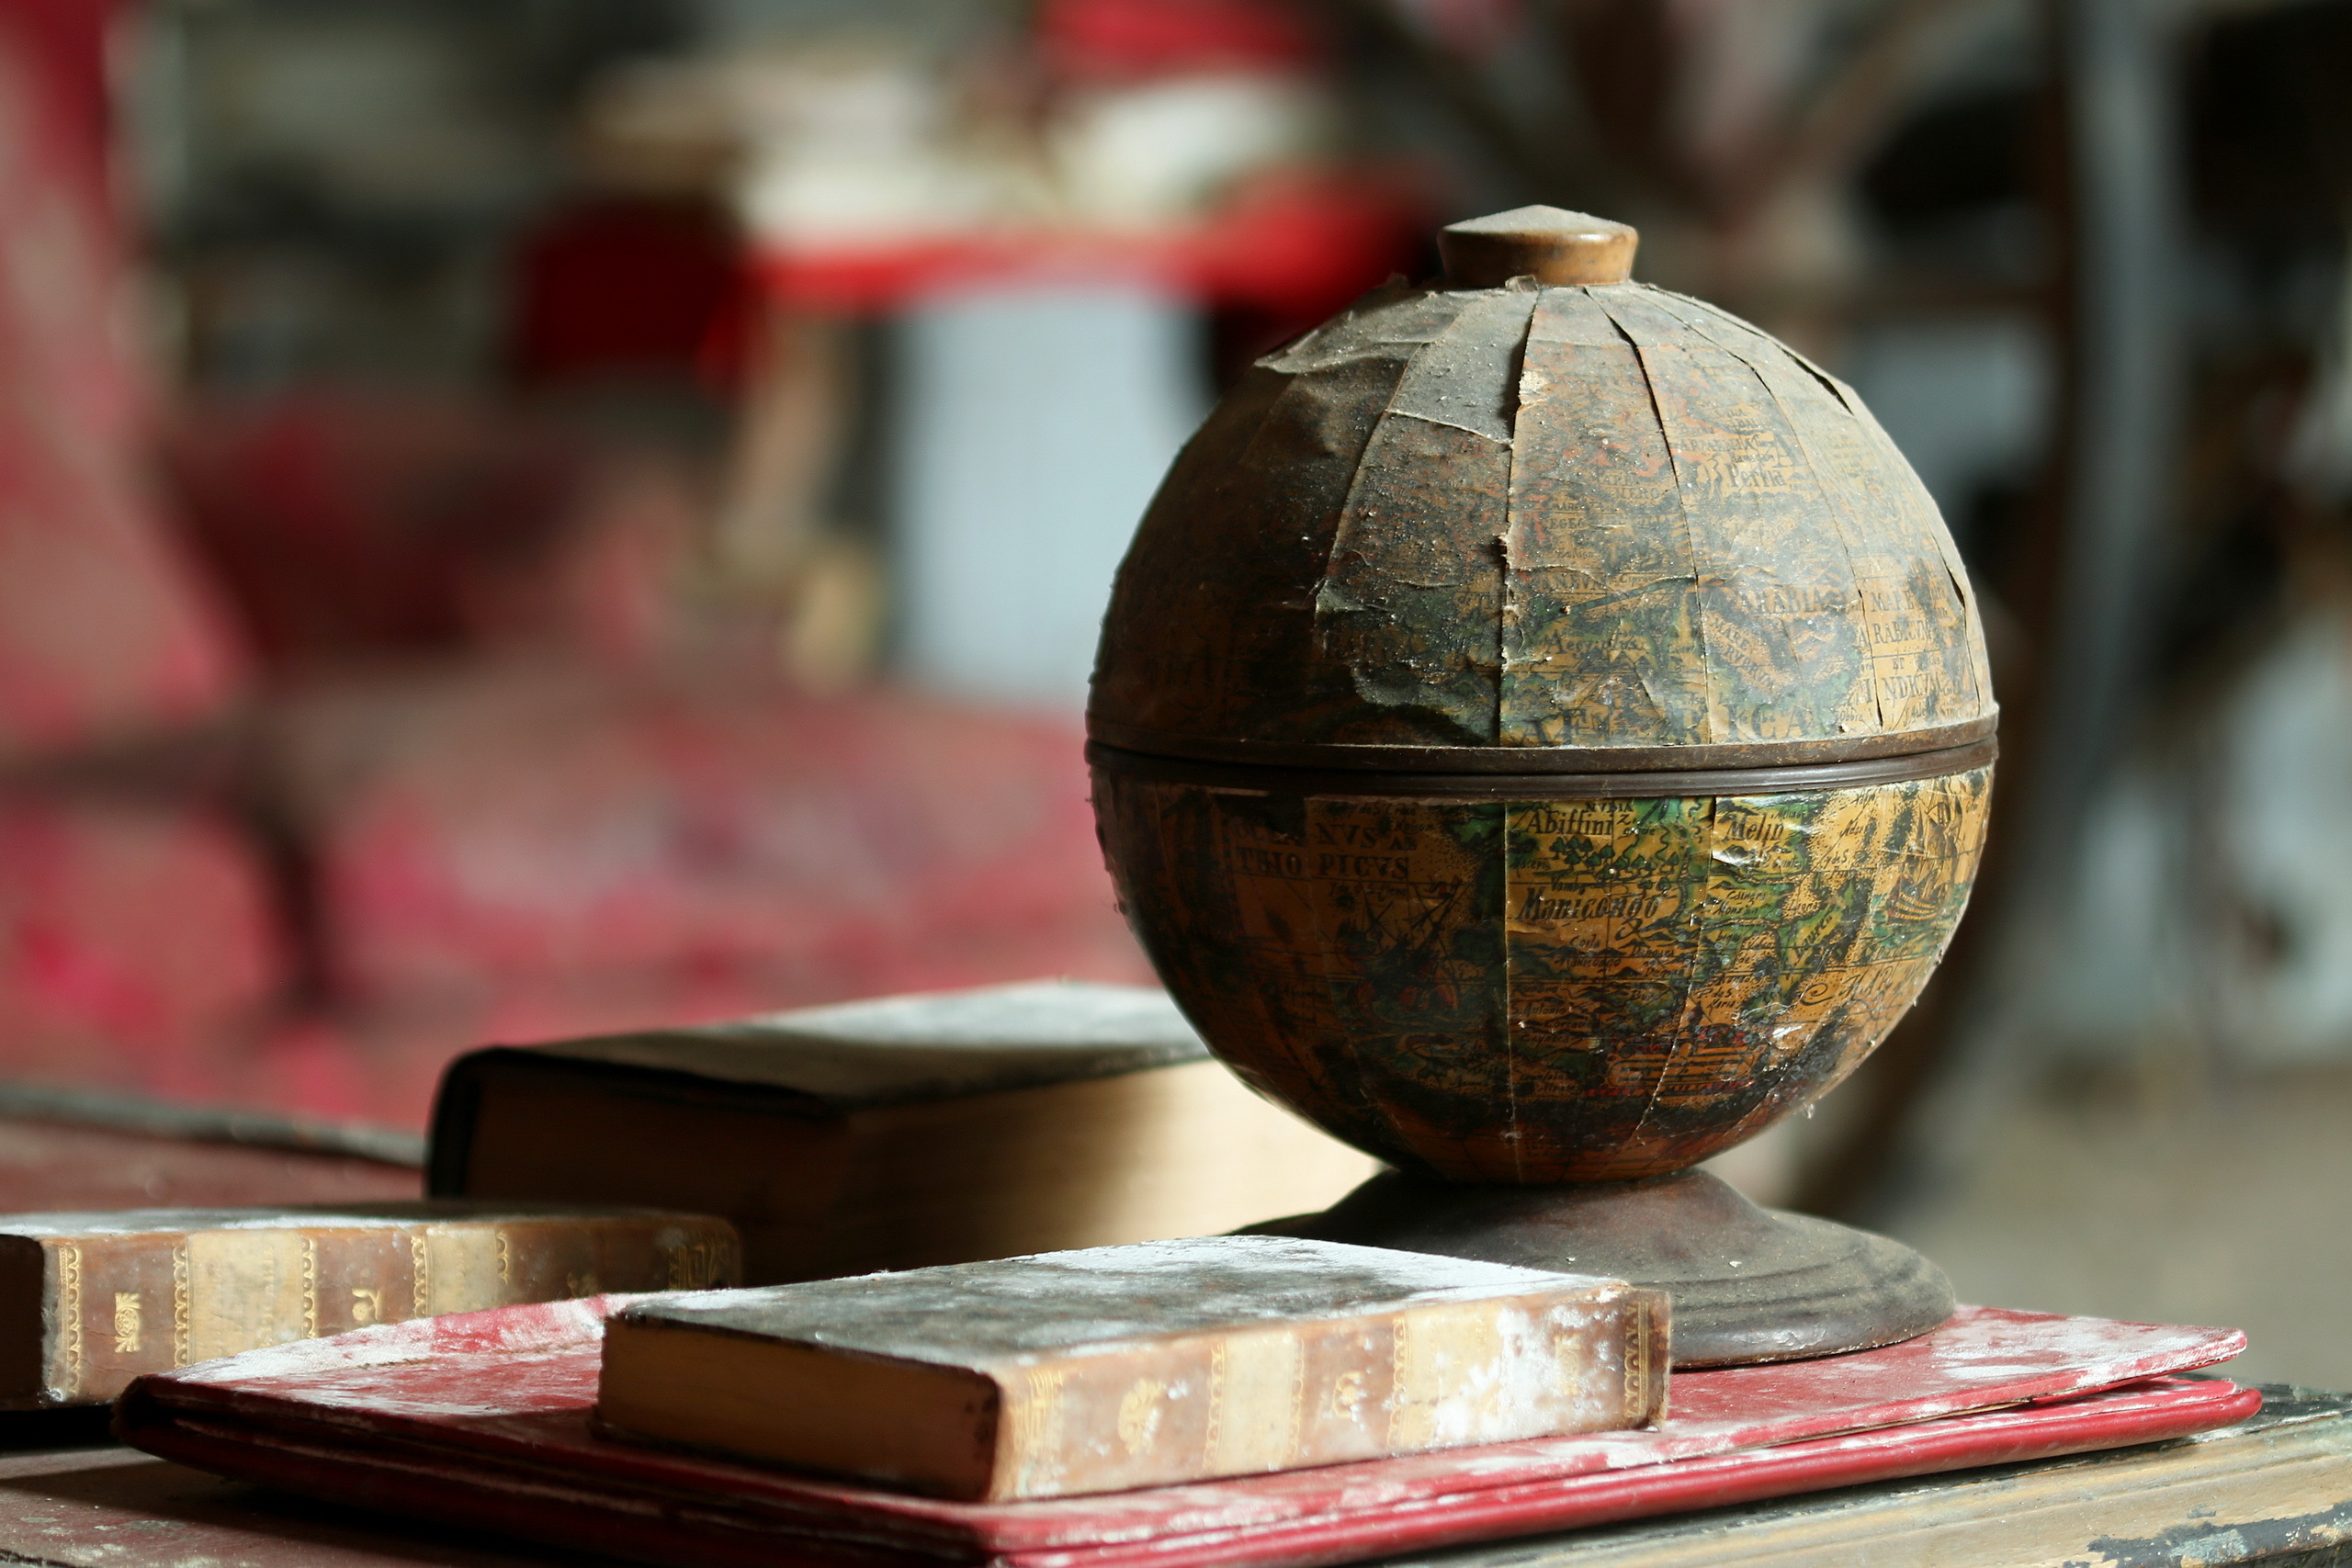 General 2560x1707 old globes indoors blurred depth of field books closeup